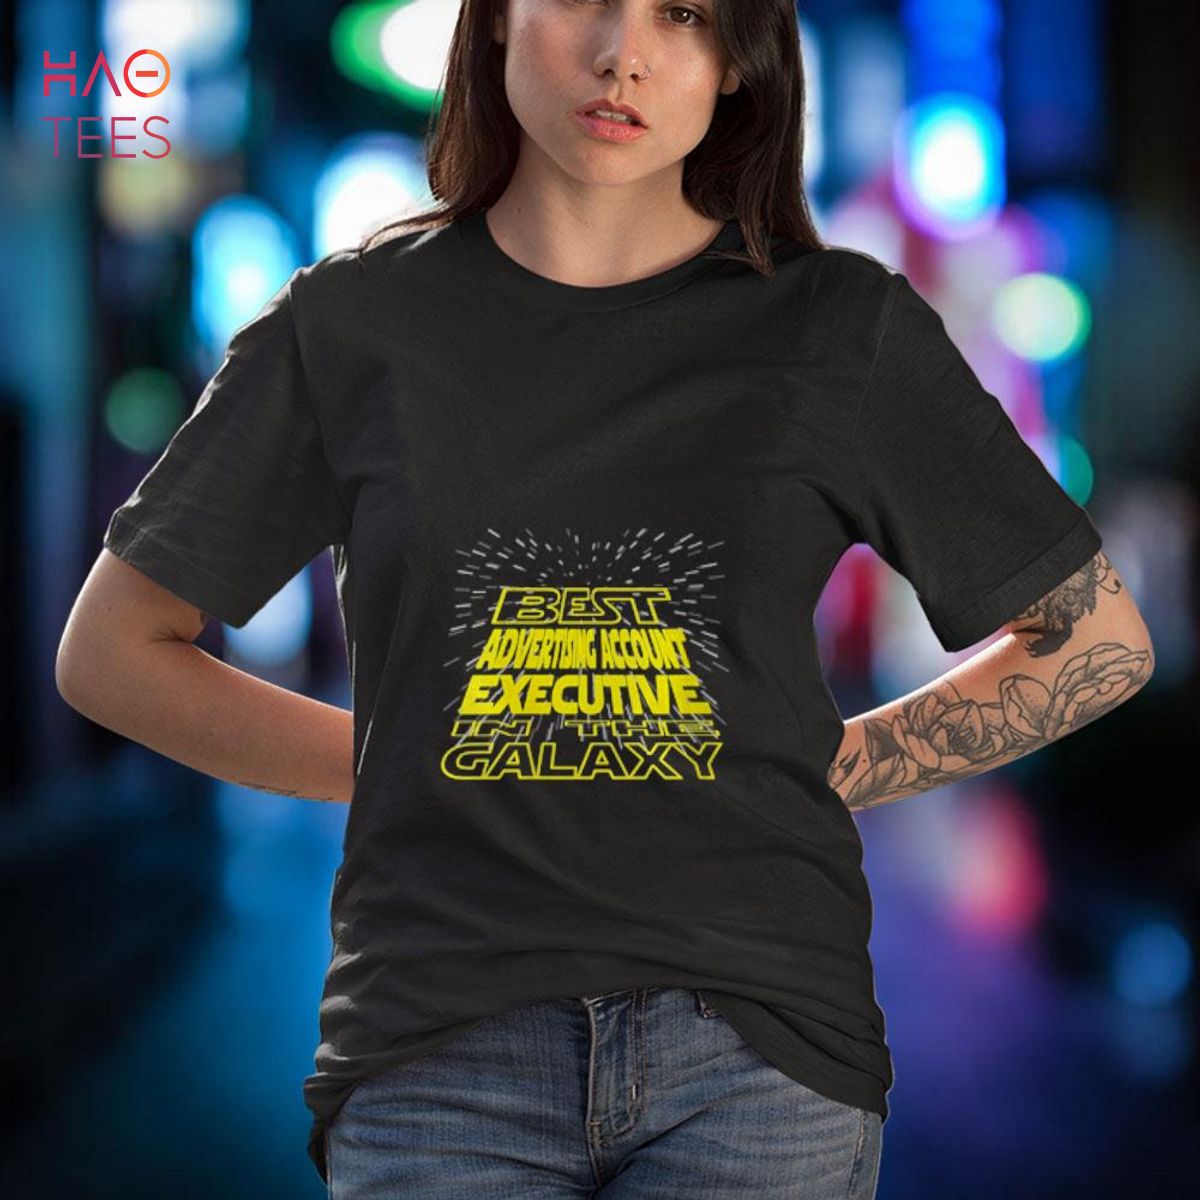 Women’s Advertising Account Executive Funny Cool Galaxy Job Shirt